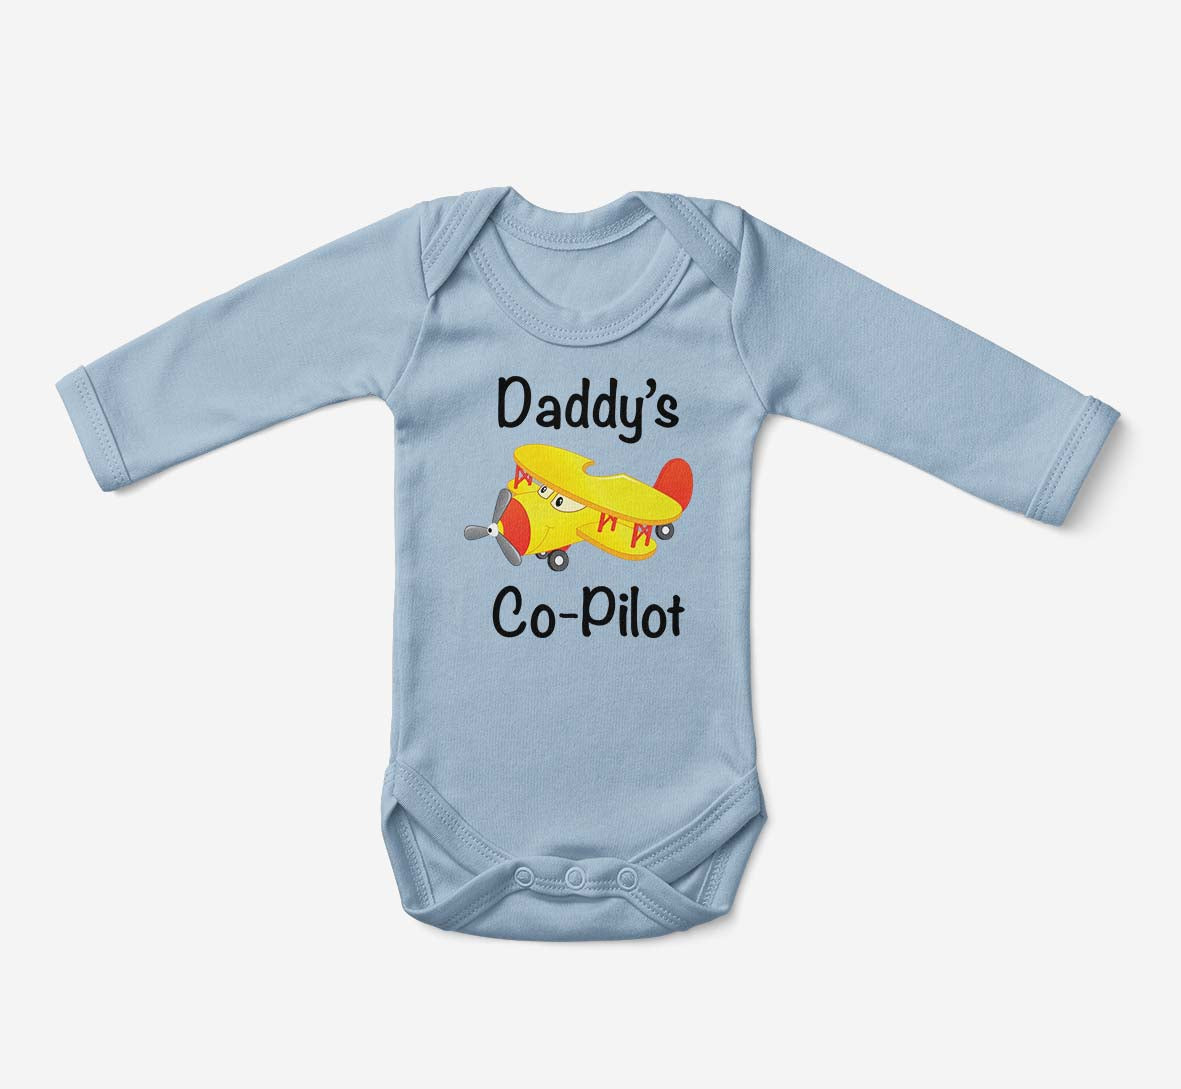 Daddy's Co-Pilot (Propeller2) Designed Baby Bodysuits